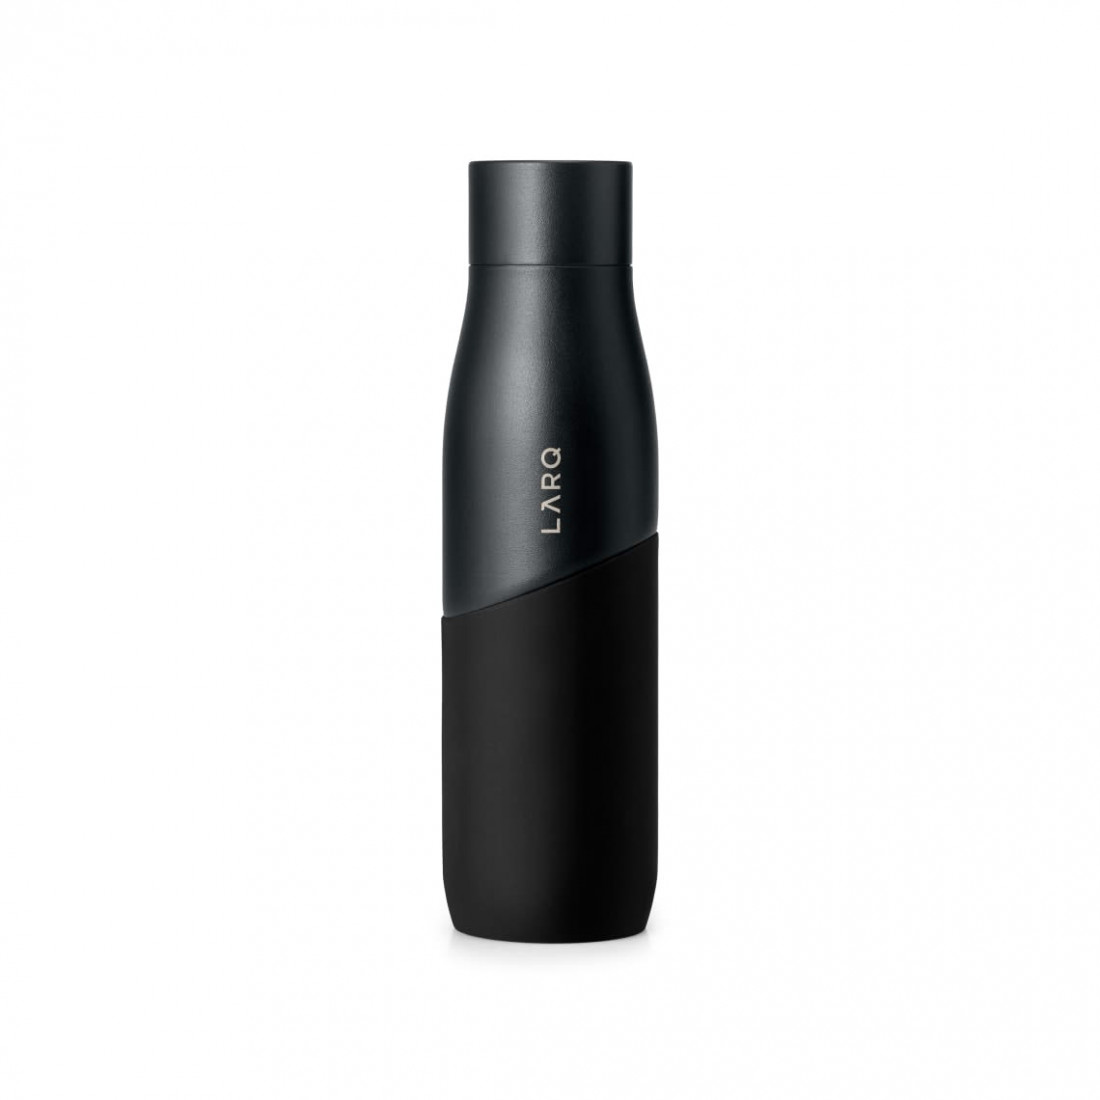 LARQ Bottle PureVis Obsidian Black 710 ml - Non Insulated